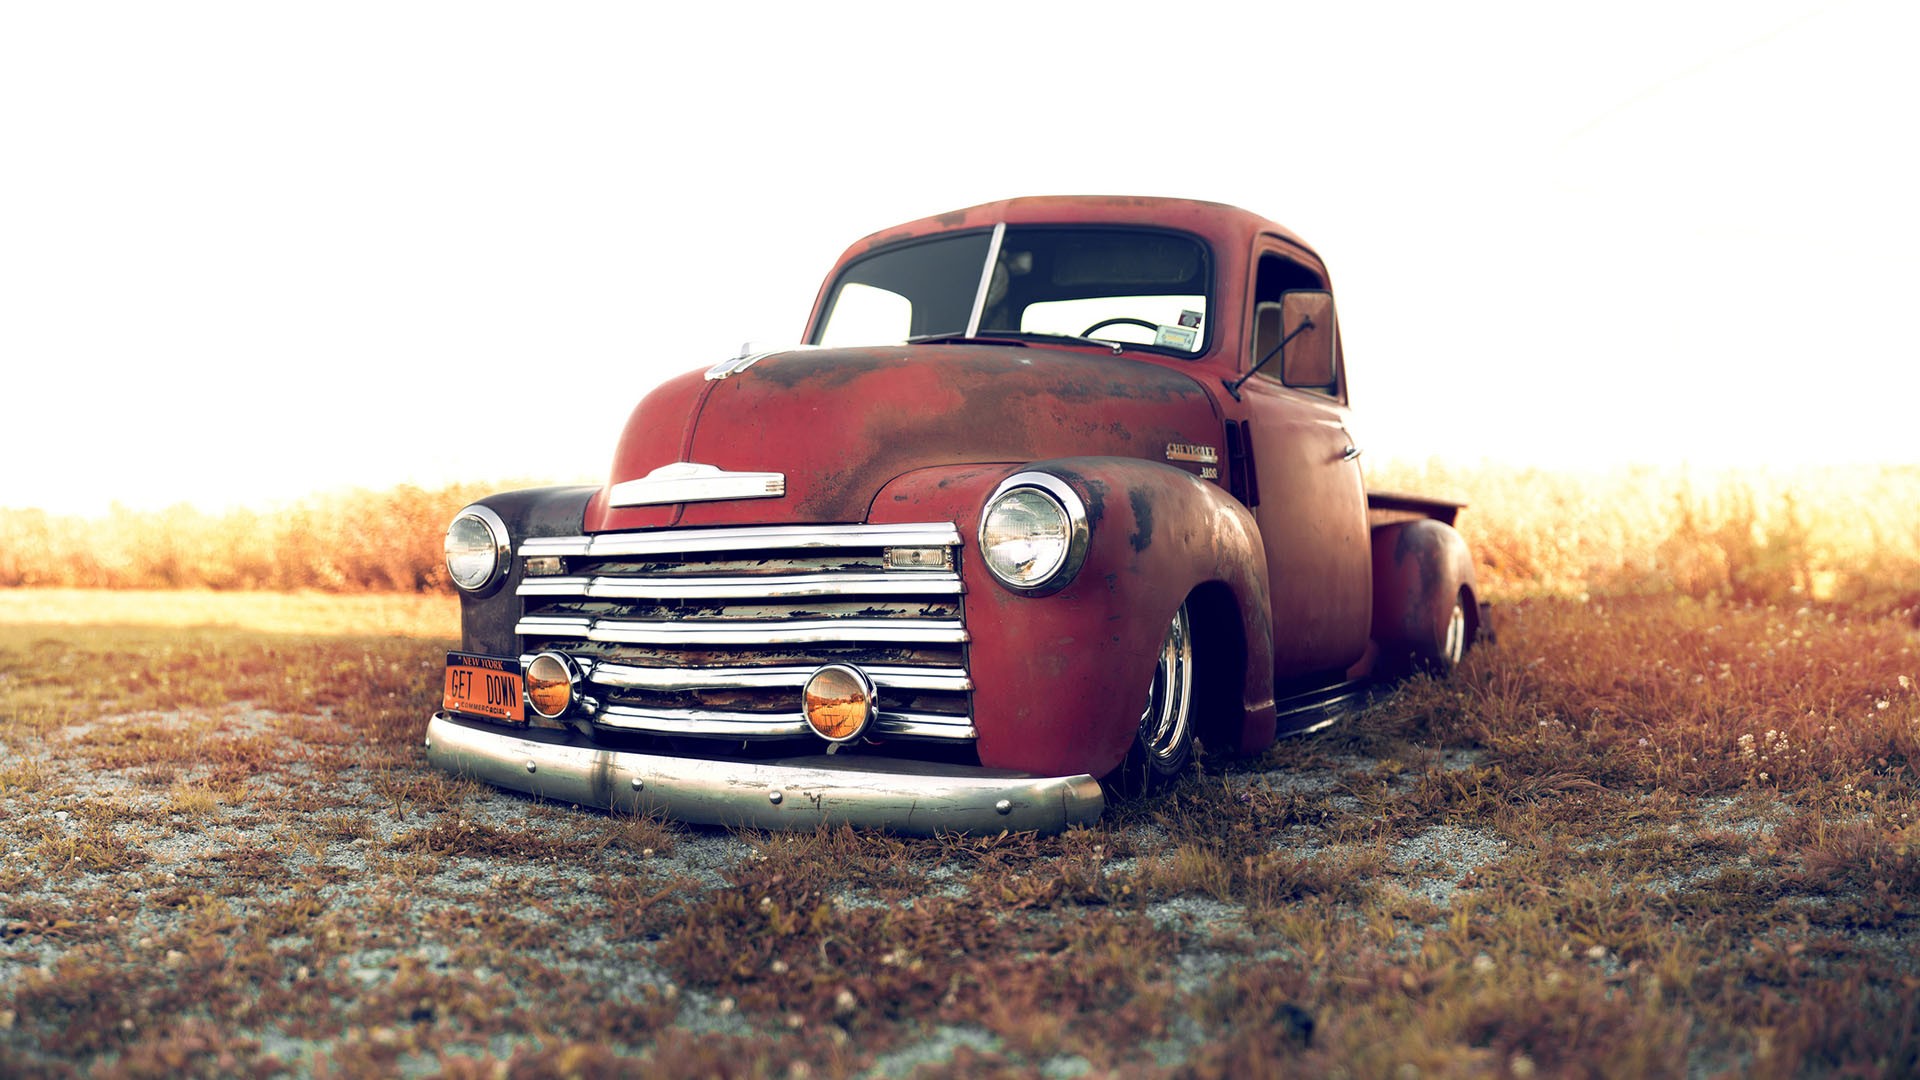 42] Chevy Truck Wallpaper Desktop on